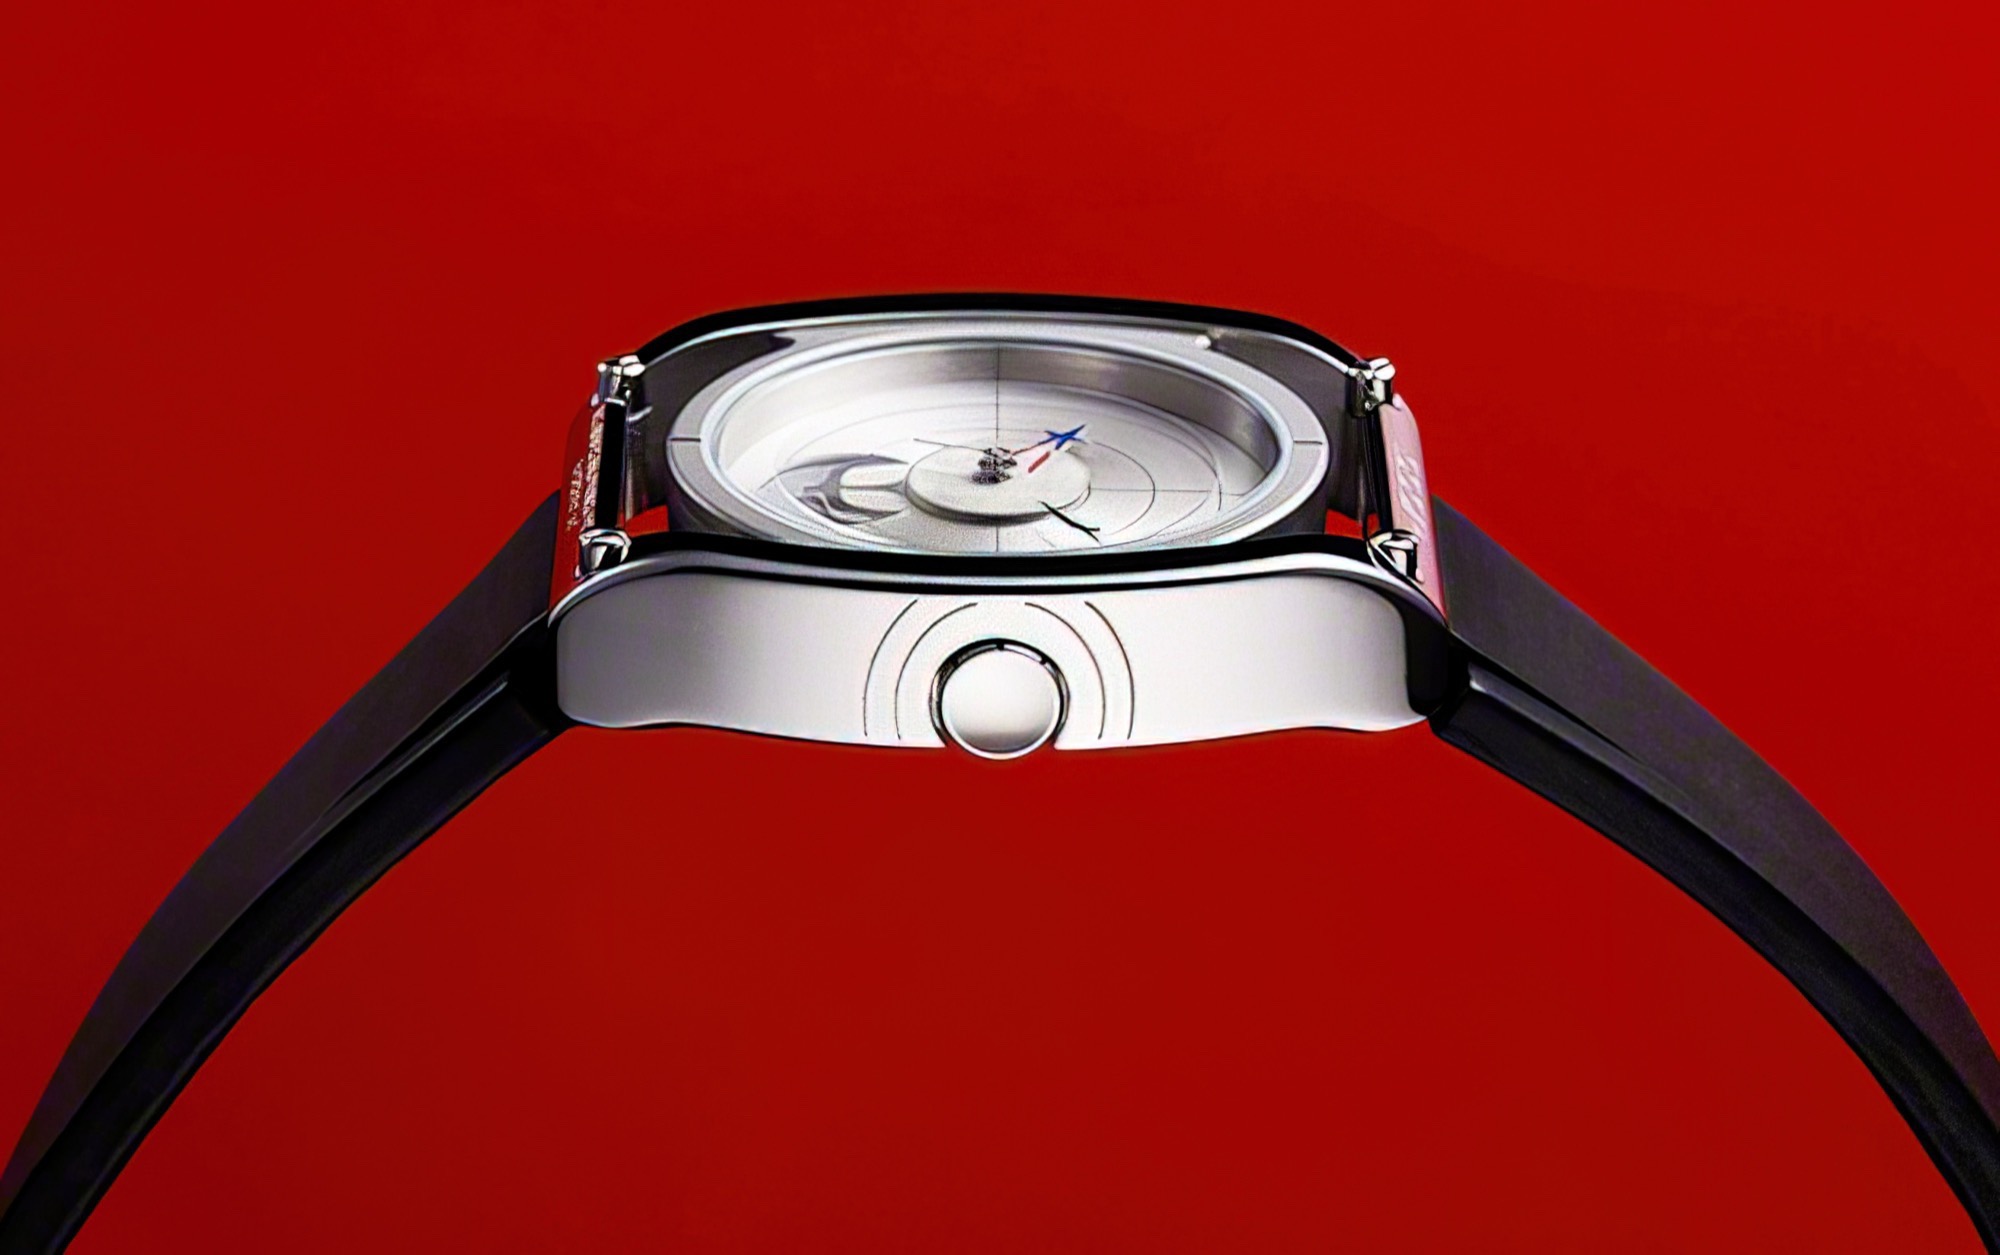 Sony Wena 3 Ultraman Edition: Unique smartwatch and wristwatch